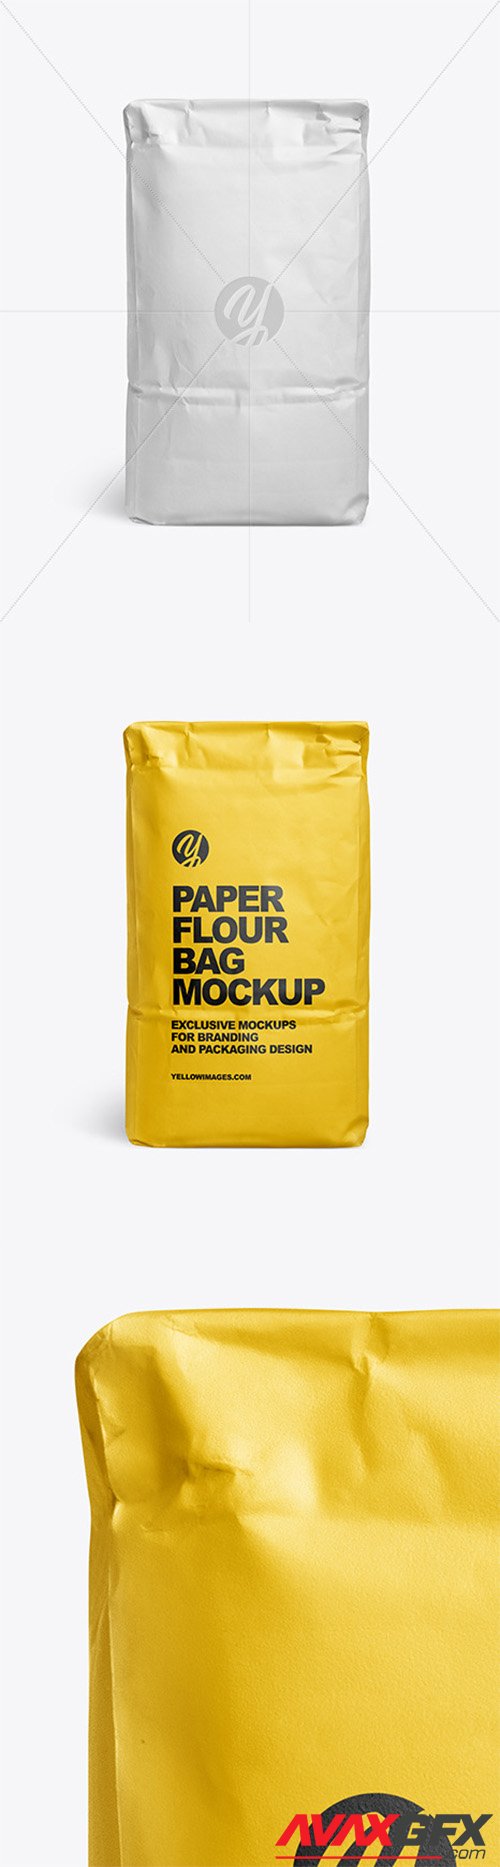 Download Free Flour Paper Bag Packaging Mockup Download Free And Premium Psd Mockups Yellowimages Mockups